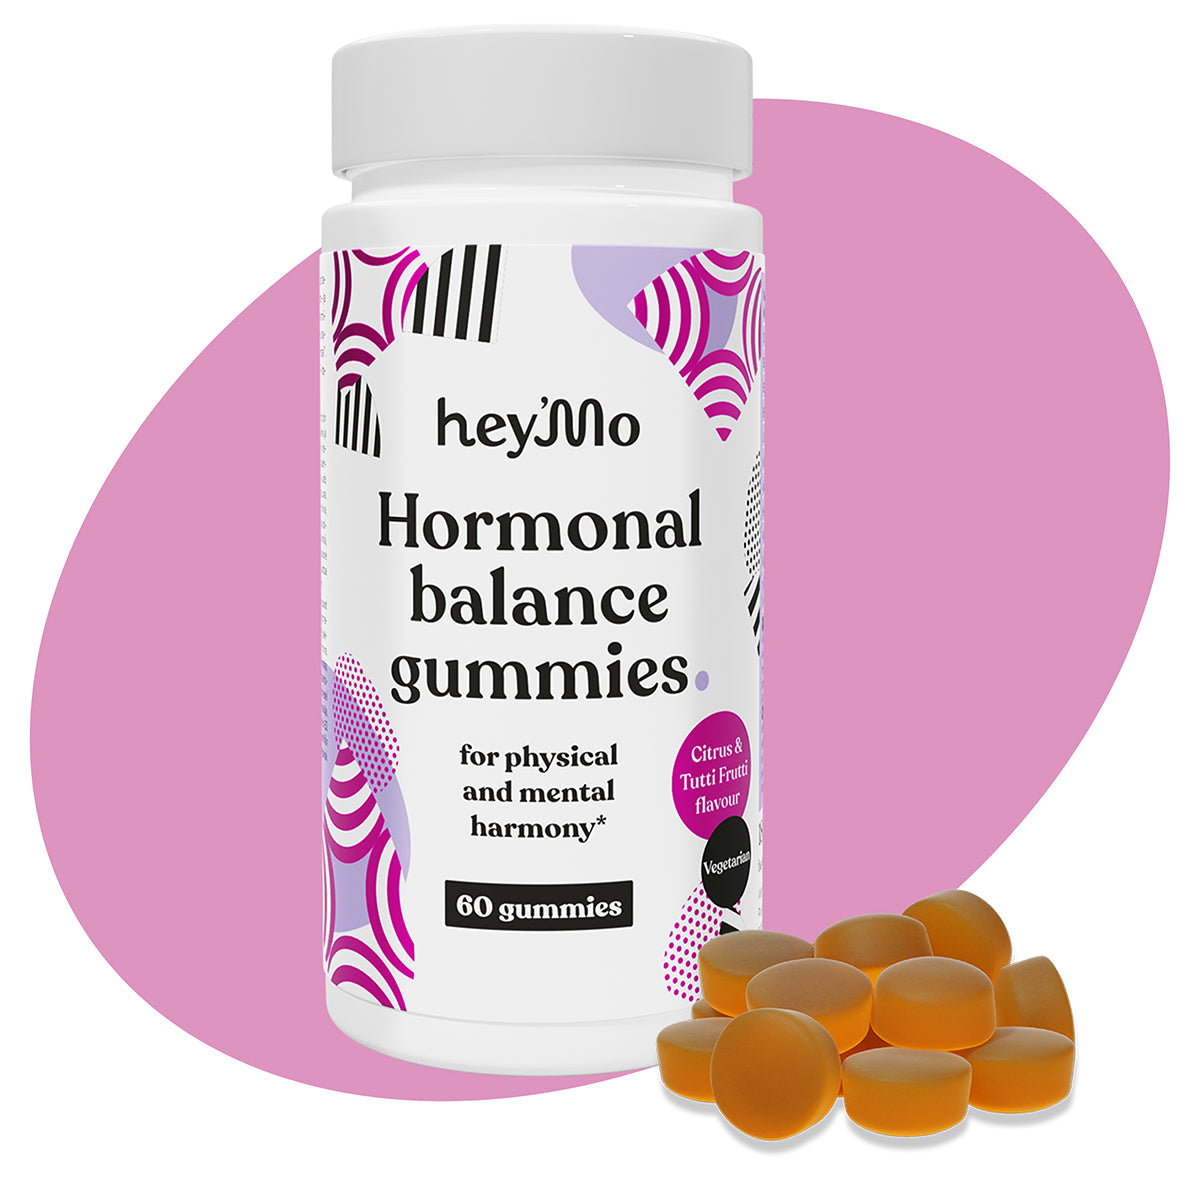 Hormonal balance gummies